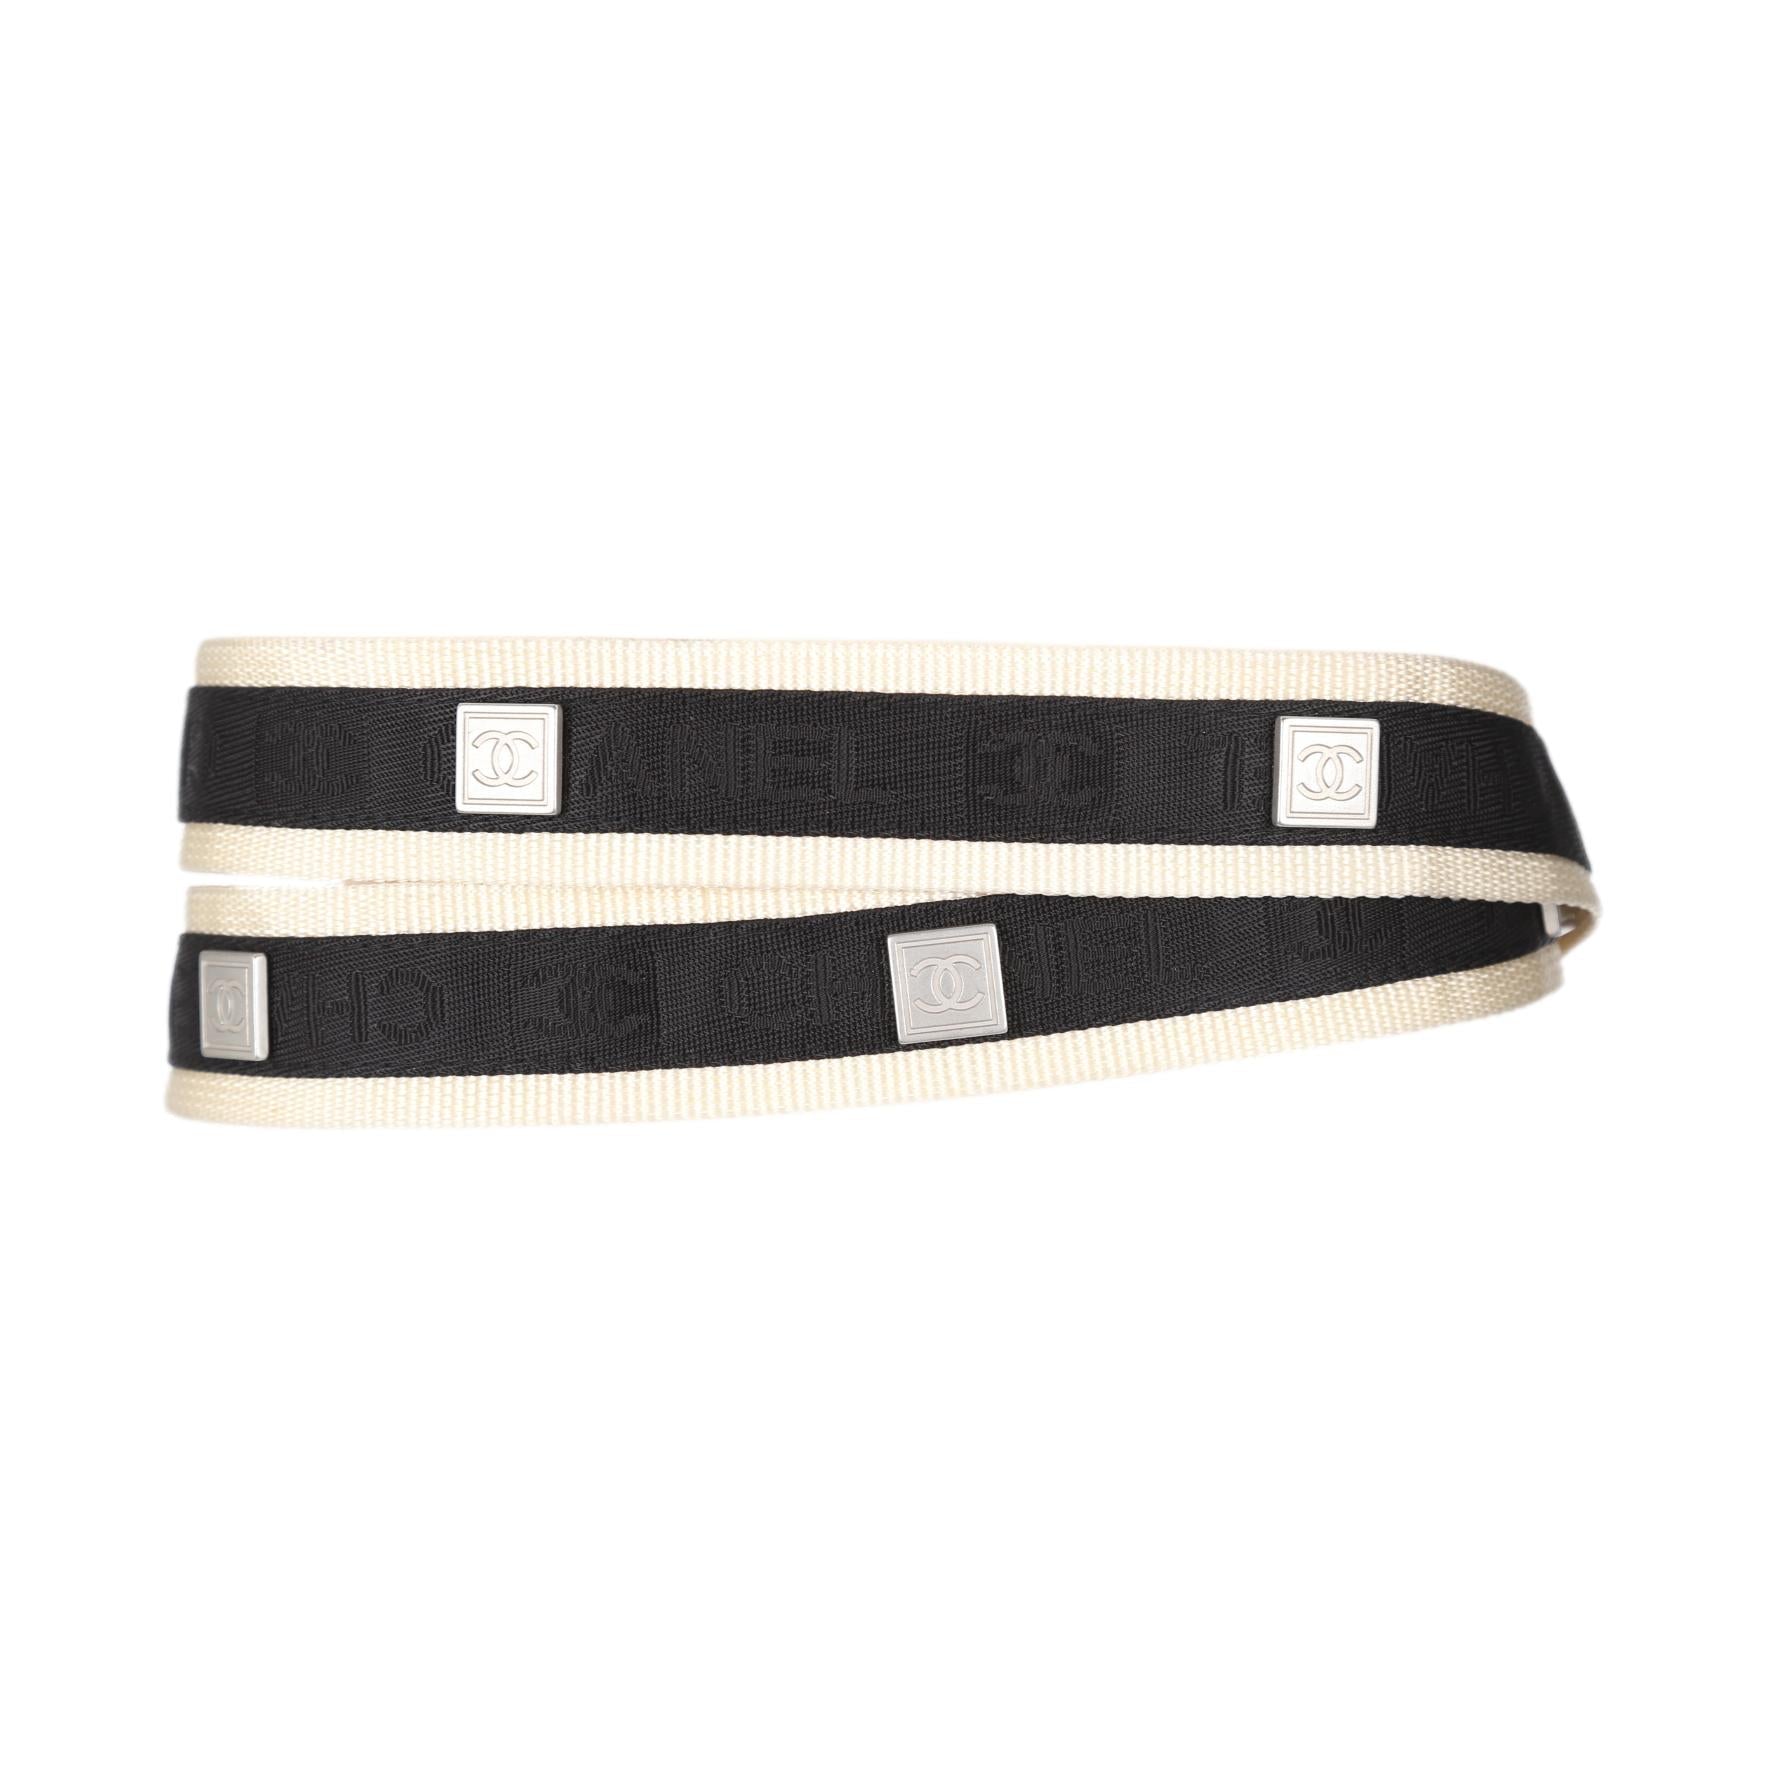 Chanel Tan Double Wrap Logo Belt - Accessories